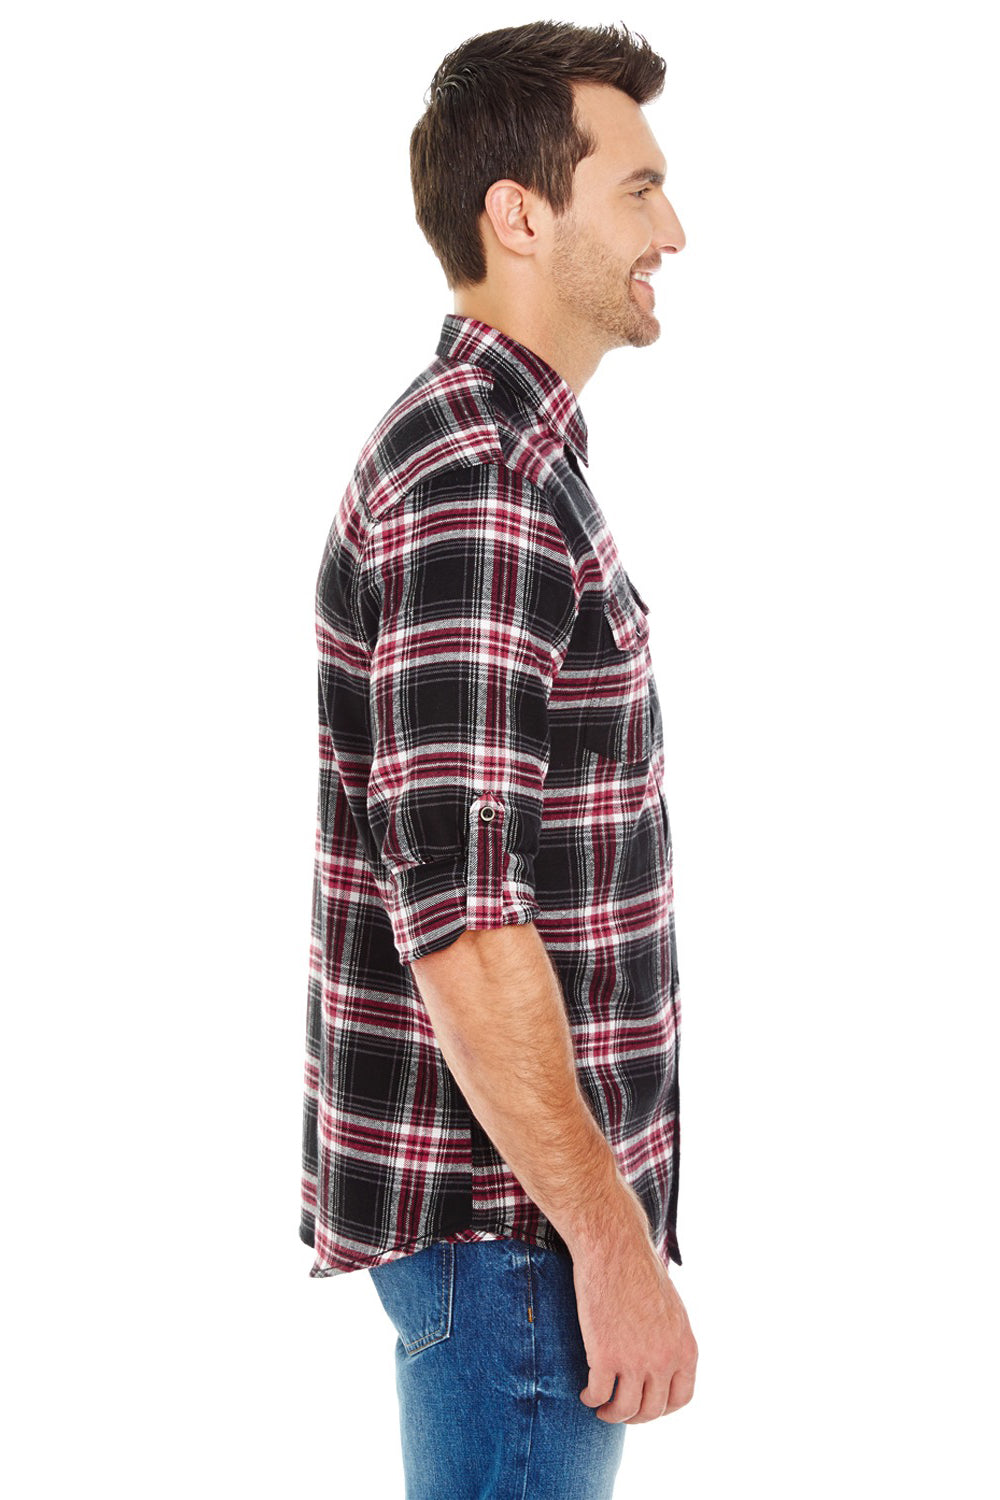 Burnside B8210/8210 Mens Flannel Long Sleeve Button Down Shirt w/ Double Pockets Red Model Side